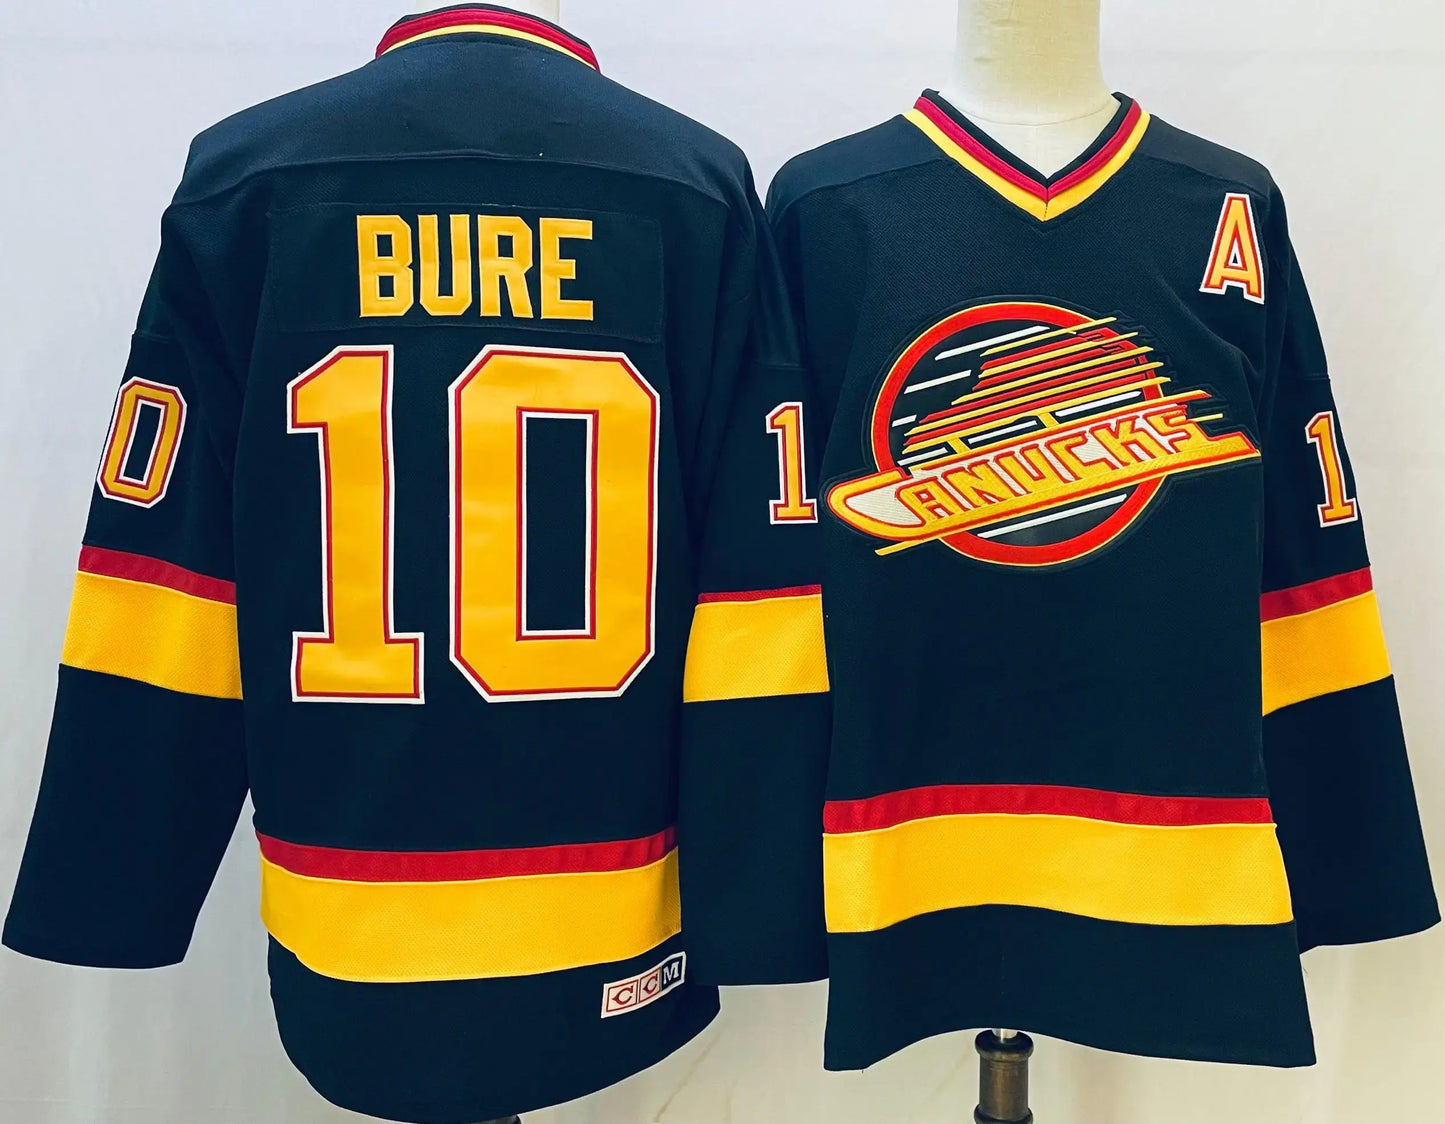 Pavel Bure #10 - Vancouver Canucks Hockey Jersey